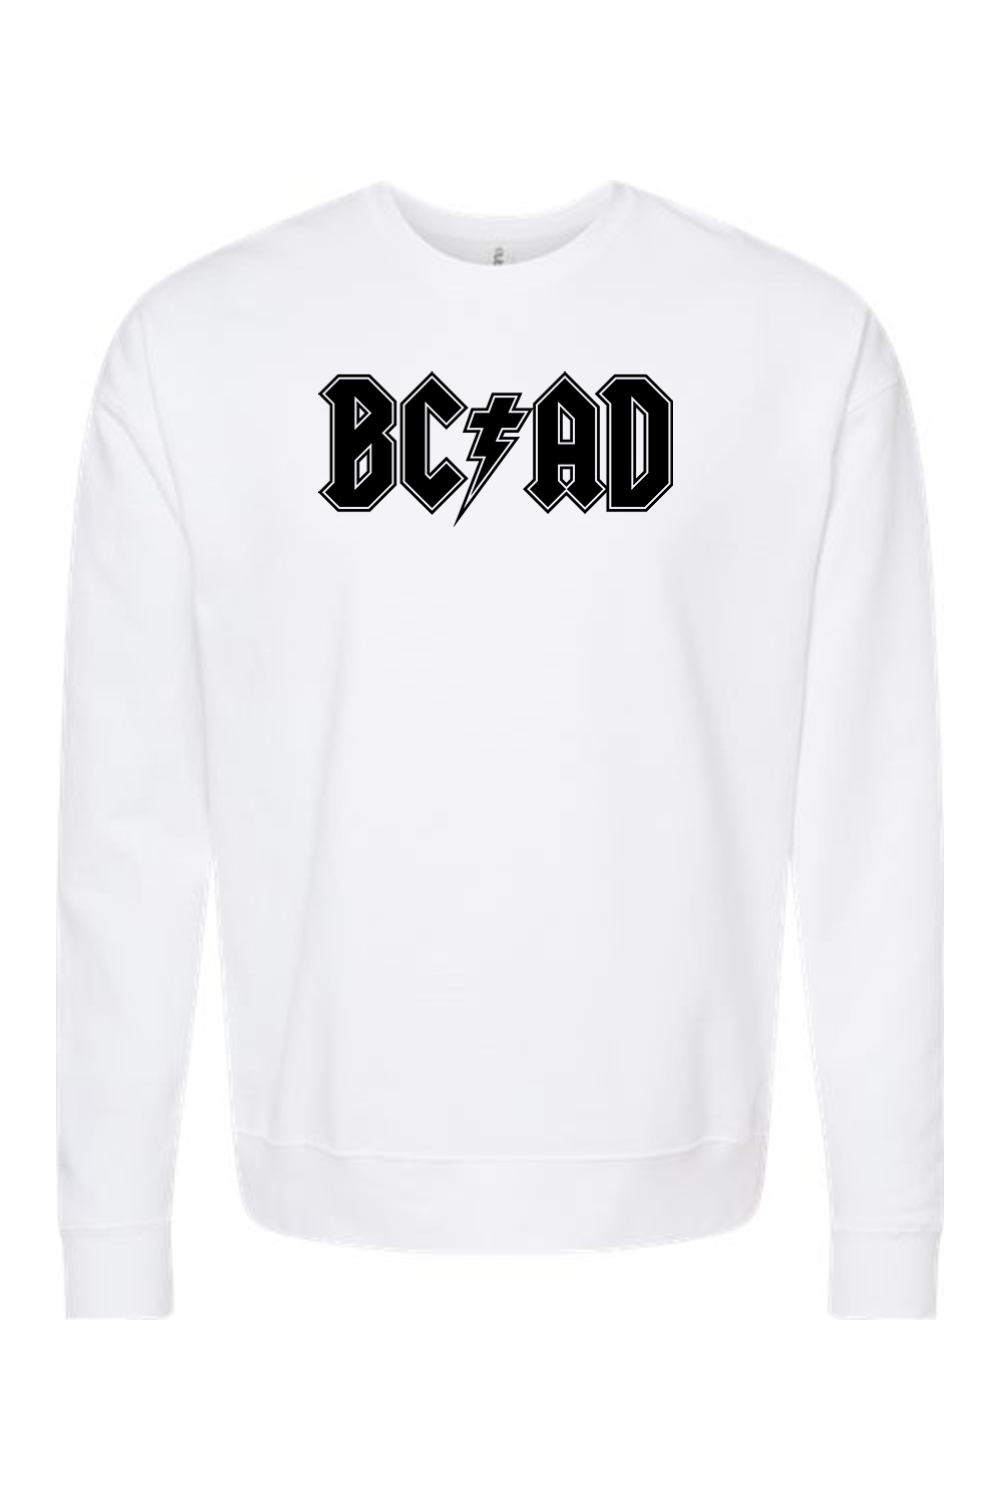 BCAD - Crewneck Sweatshirt